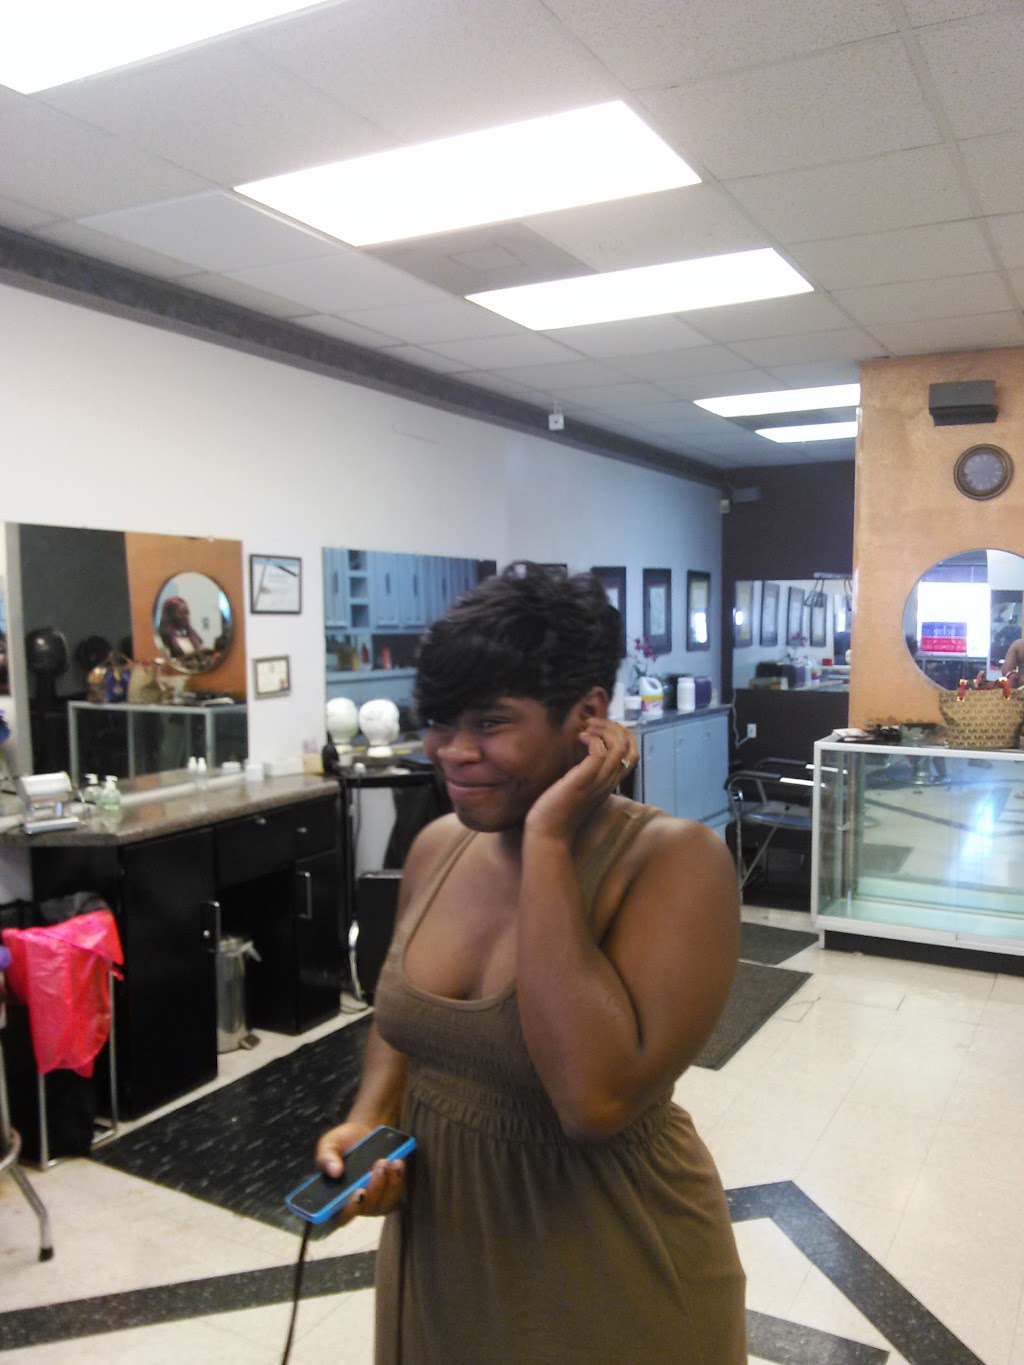 Flewellenss Hair Salon | 3611 S Lancaster Rd, Dallas, TX 75216, USA | Phone: (214) 371-3322